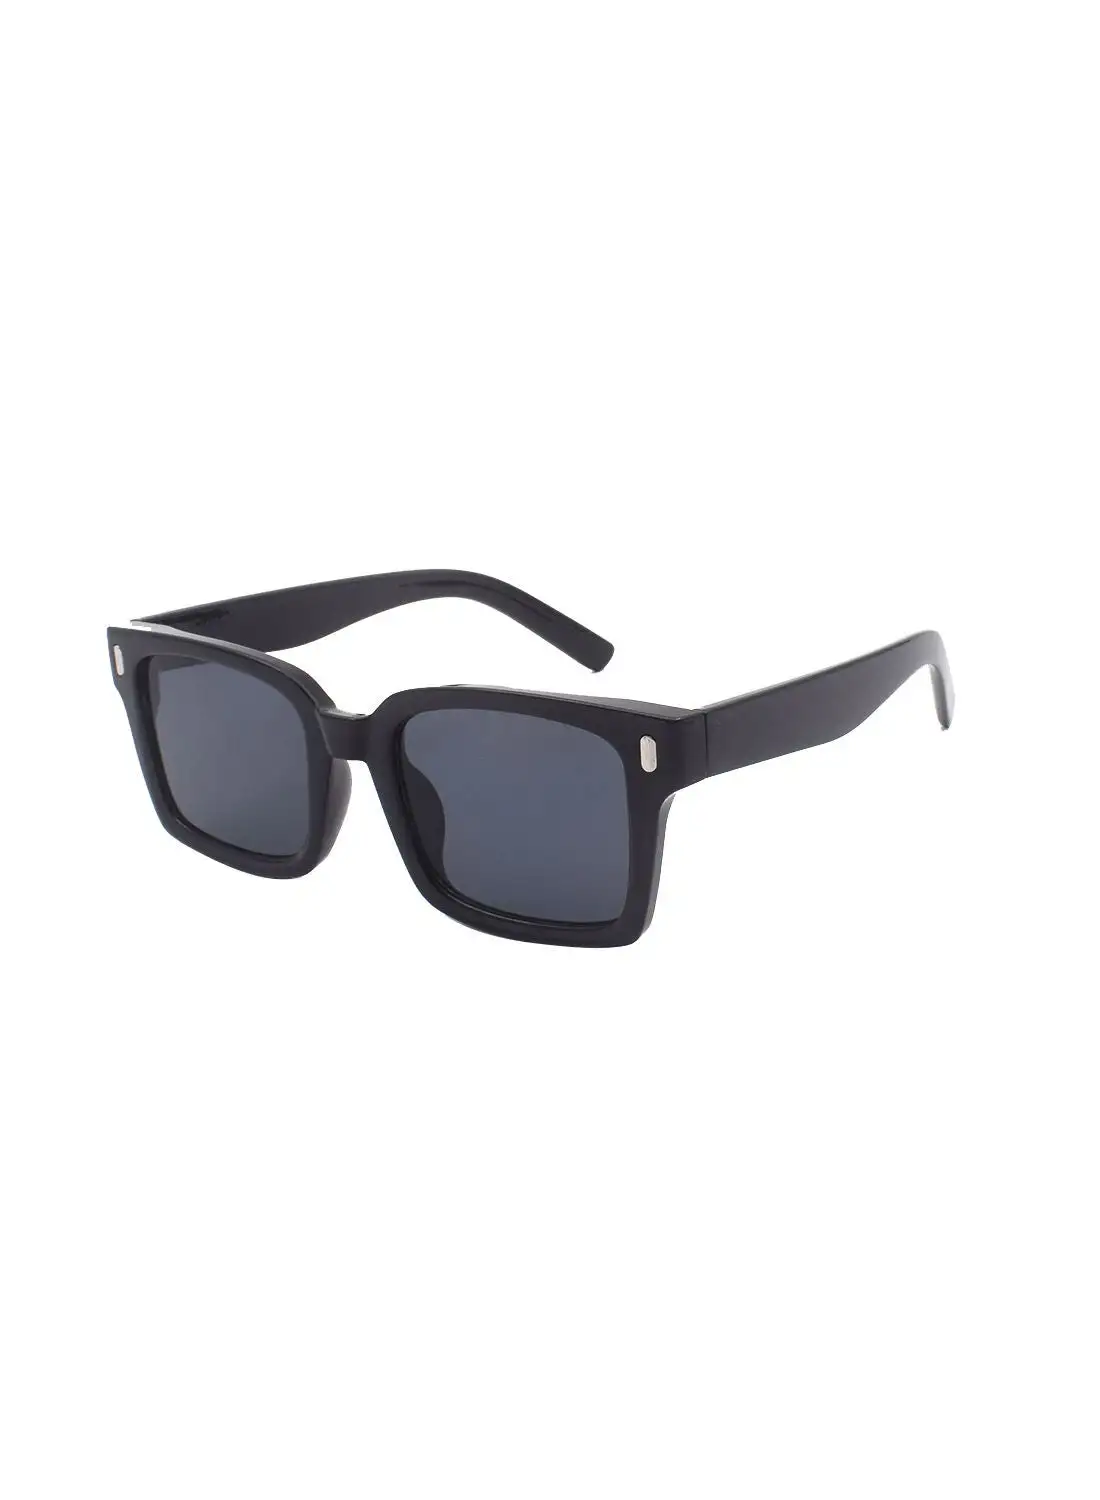 MADEYES Rectangular Sunglasses EE20X063-1